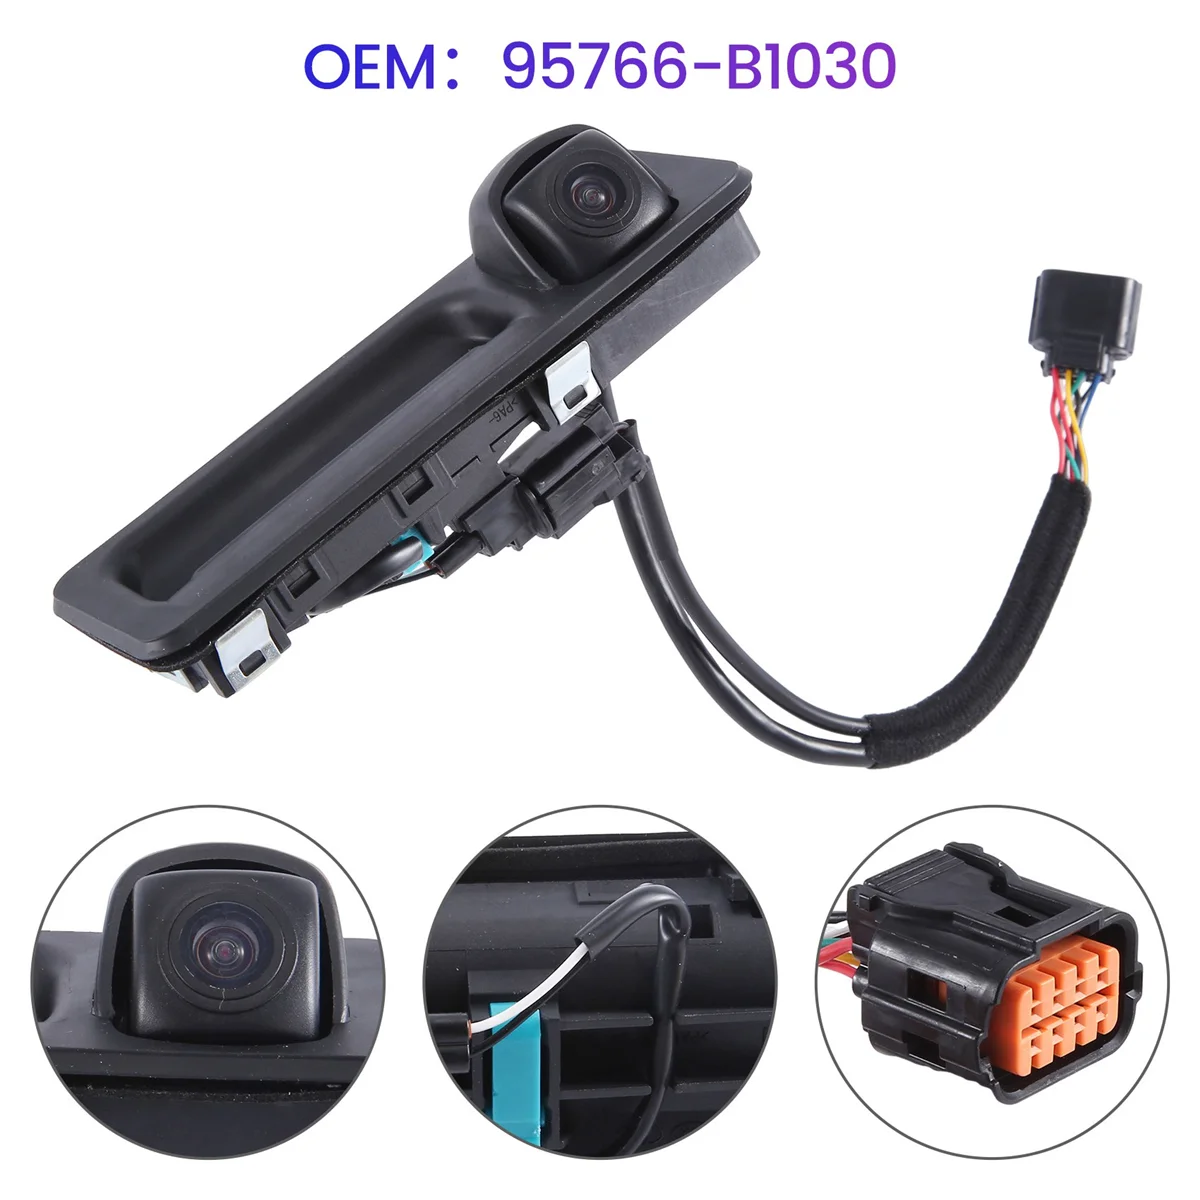 

95766-B1030 Car Rear View Backup Camera y for Hyundai Genesis 2015-2016